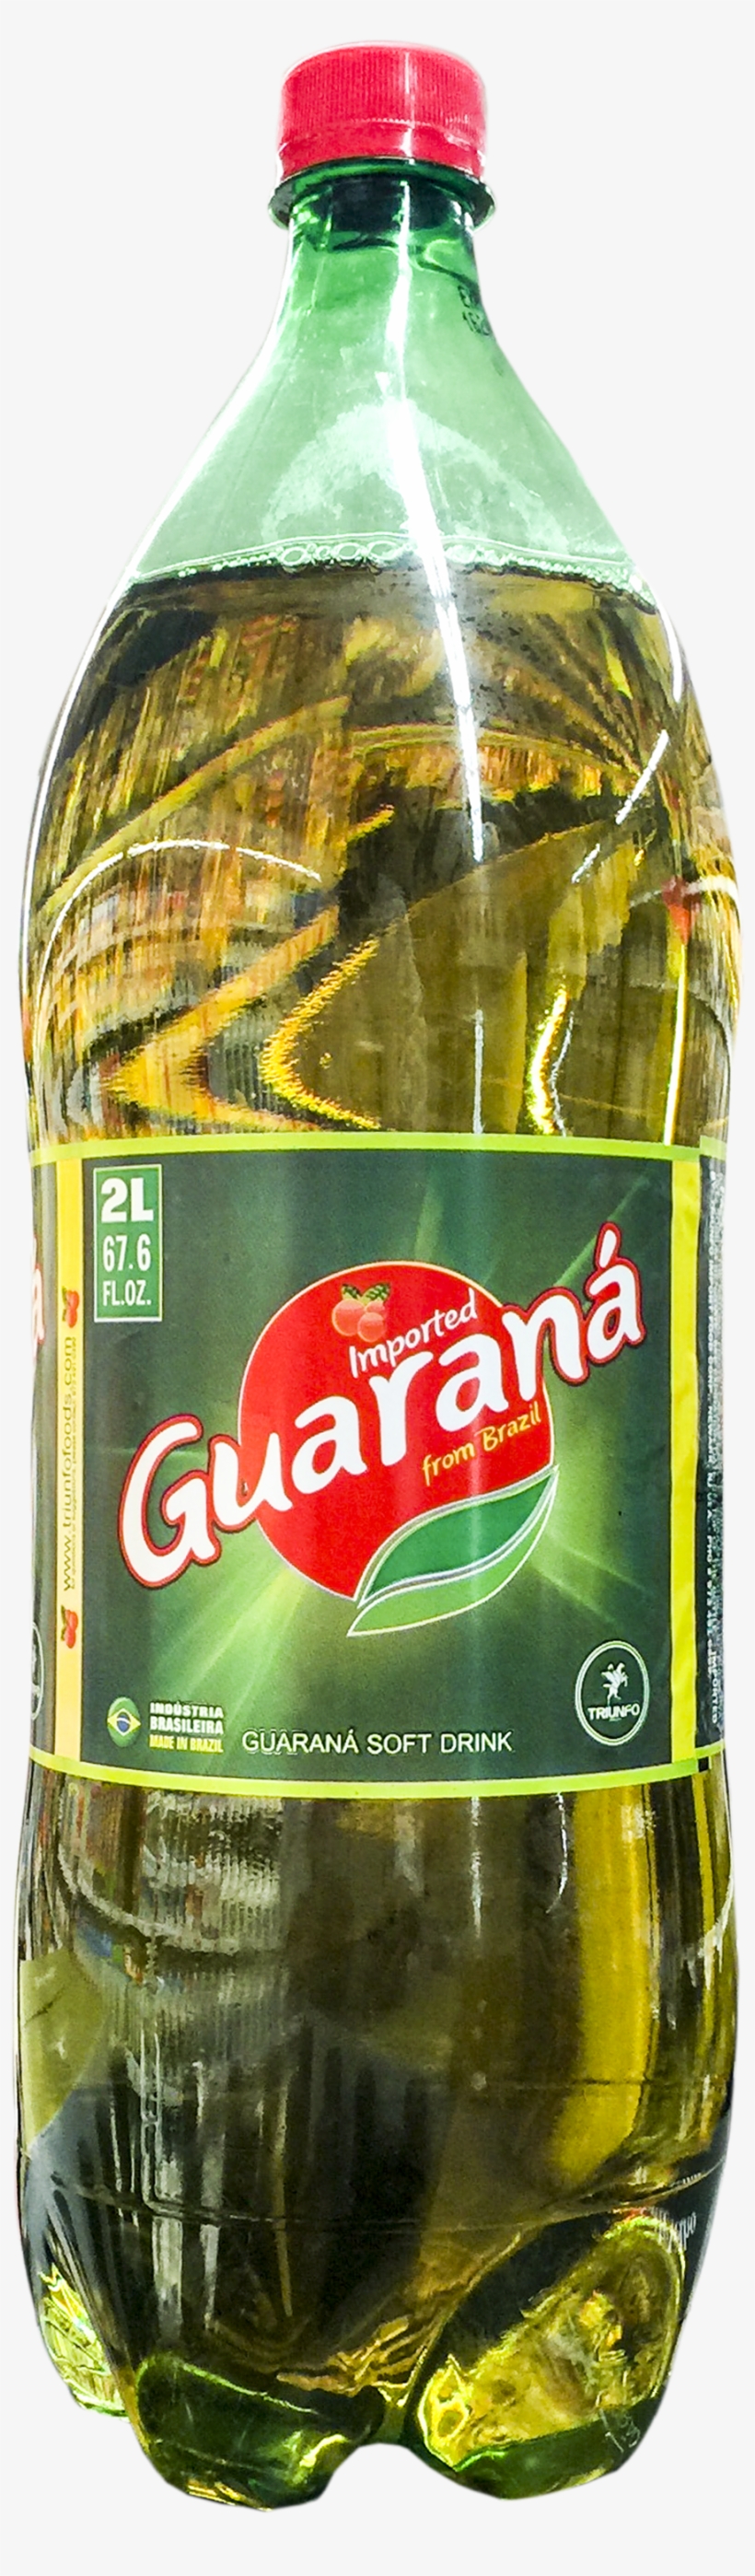 Triunfo Guarana 2l - Two-liter Bottle, transparent png #4253397